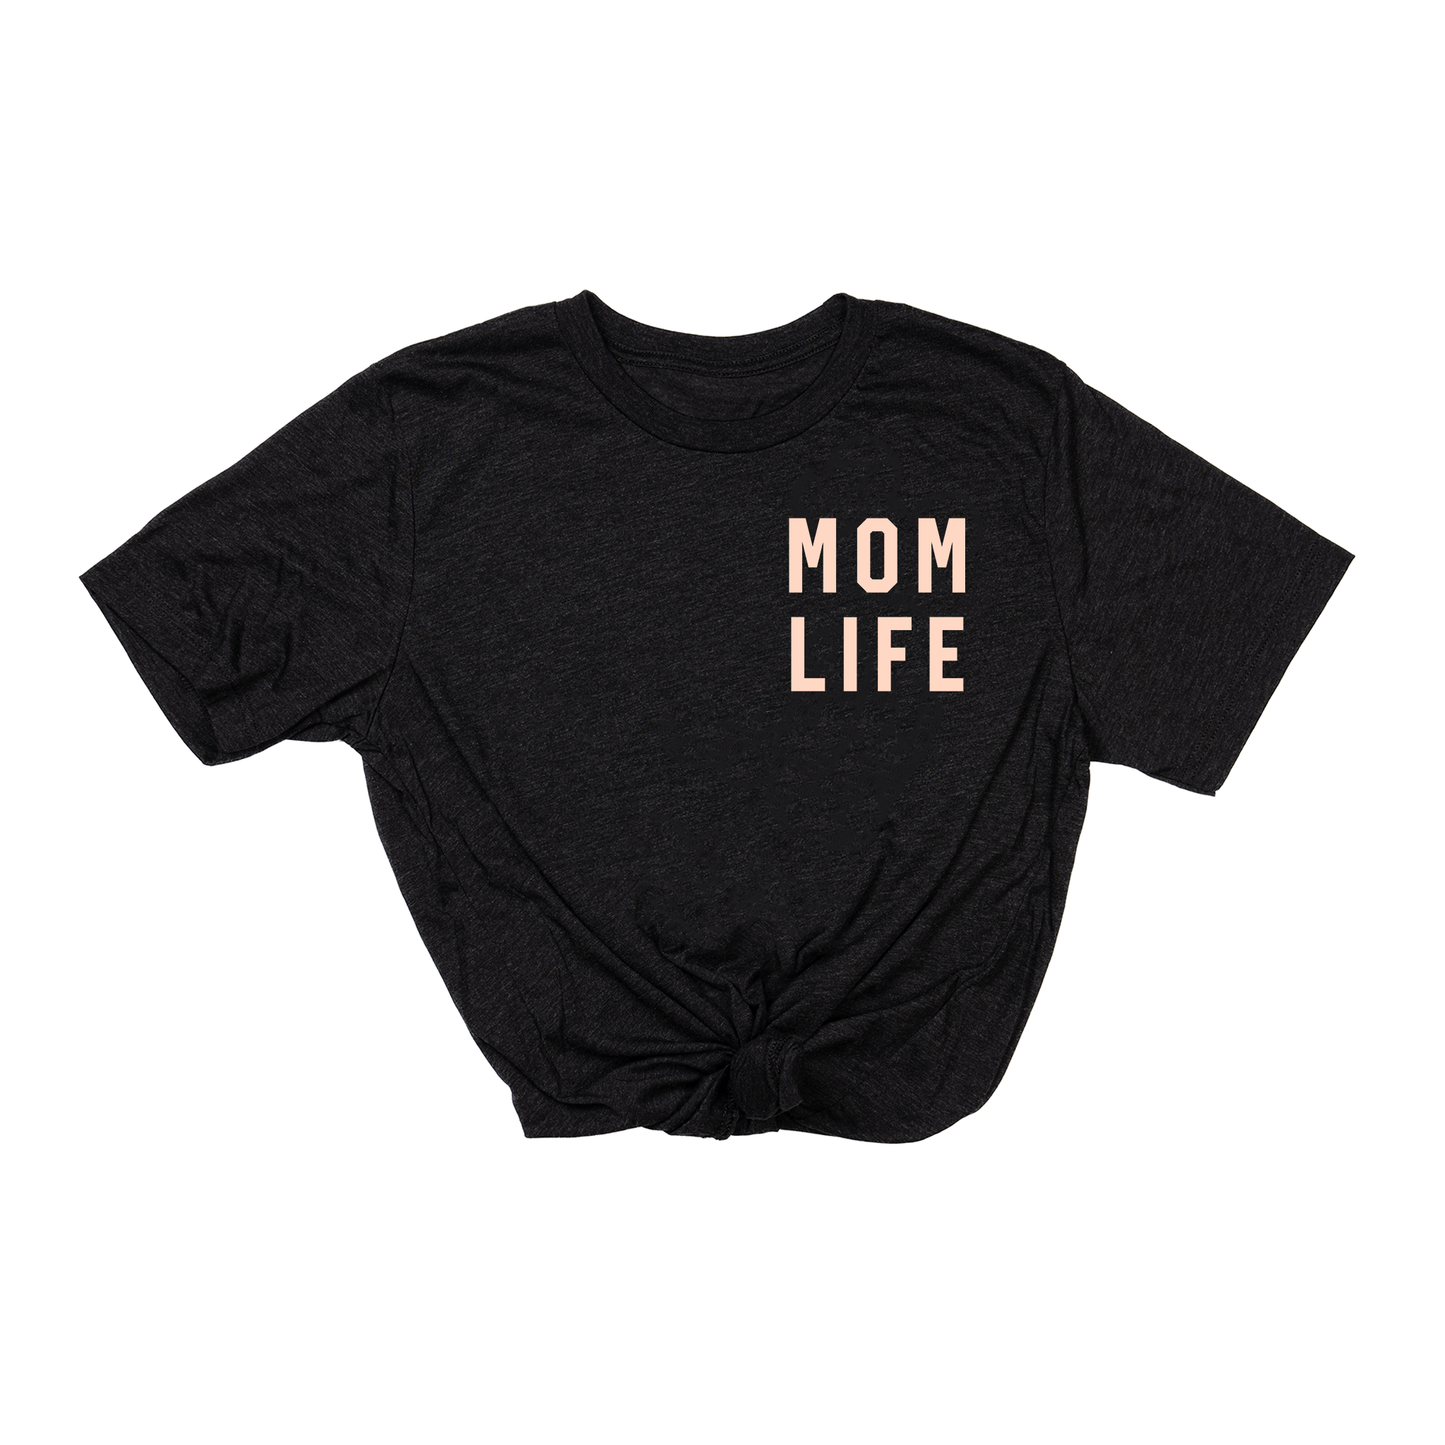 Mom Life (Pocket, Peach) - Tee (Charcoal Black)